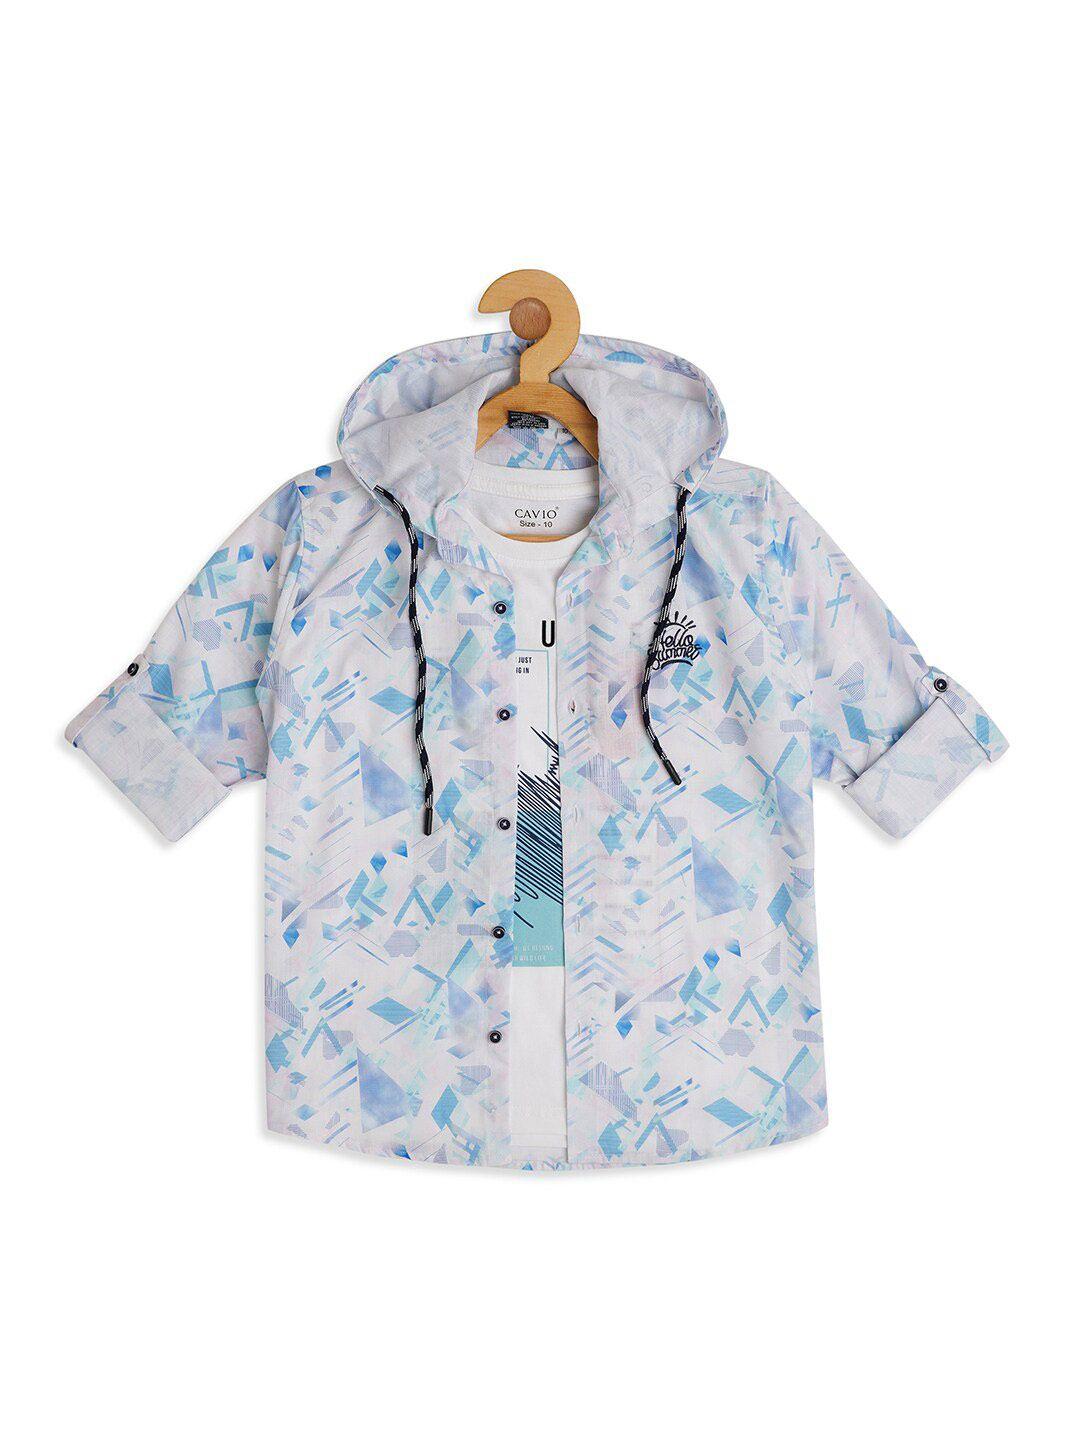 cavio boys hooded abstract printed comfort long sleeves cotton casual shirt